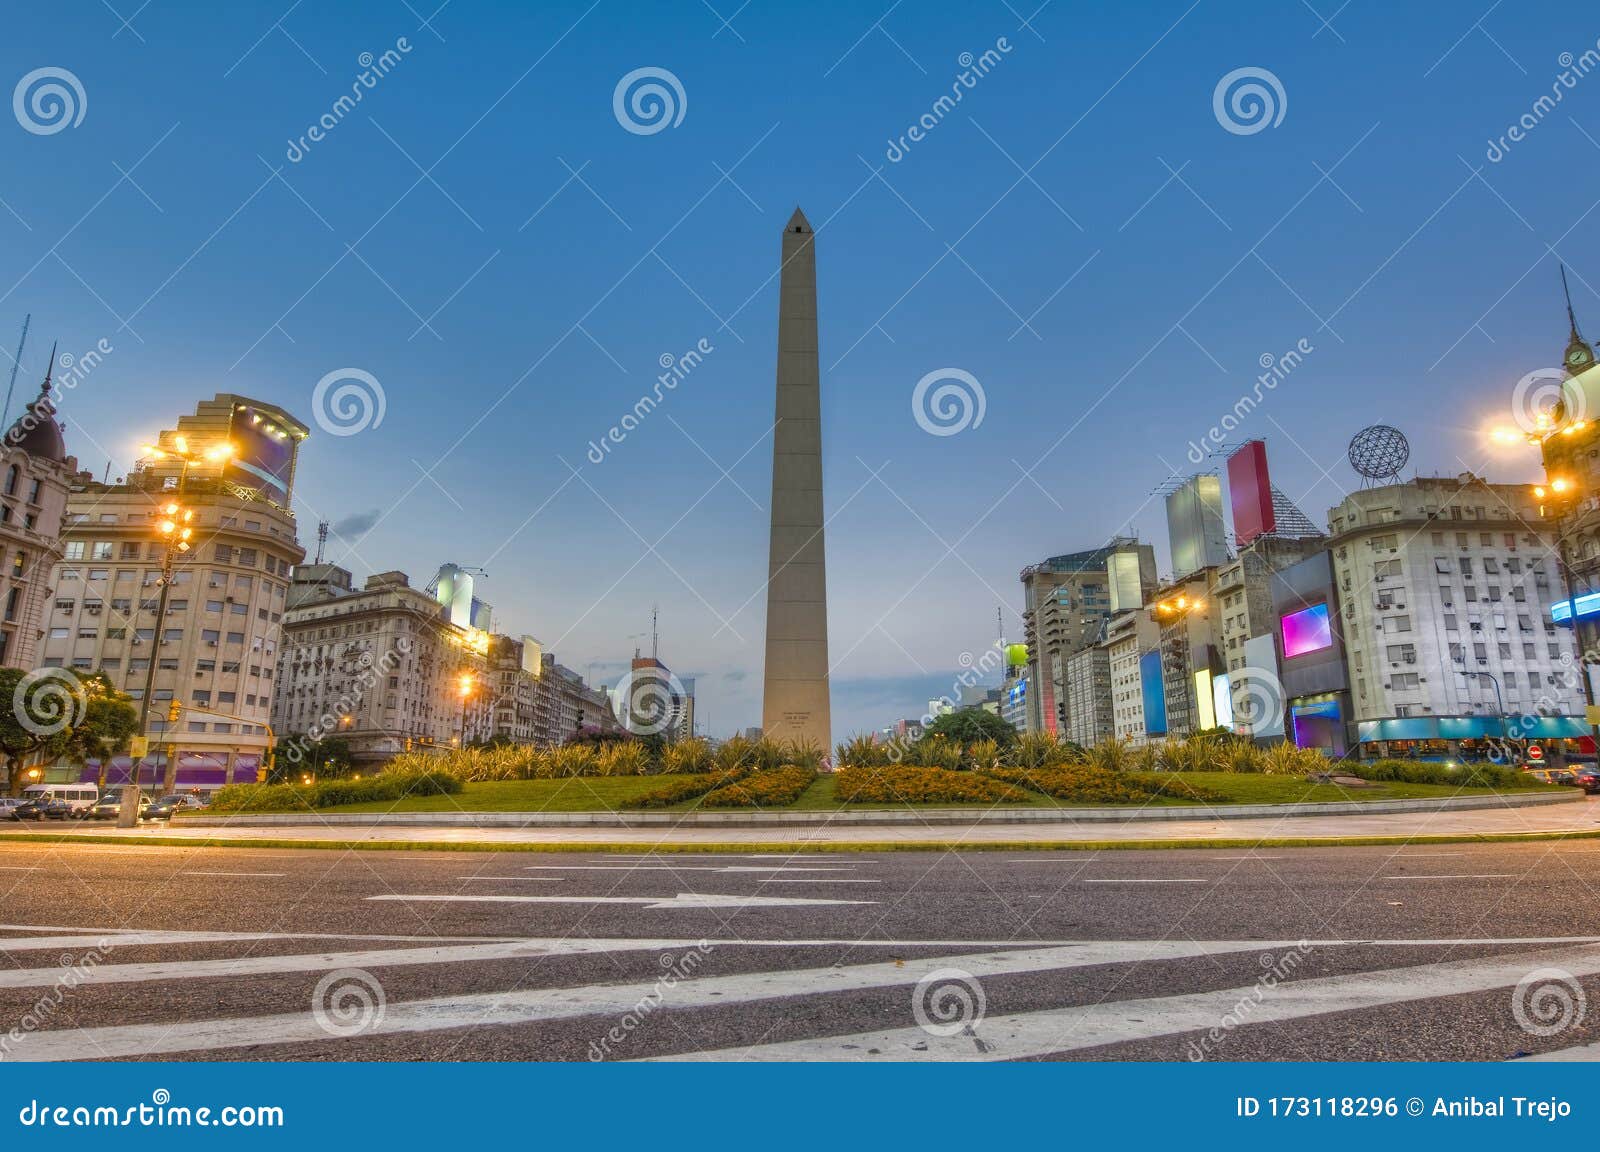 the obelisco, located at 9 de julio avenue in buenos aires